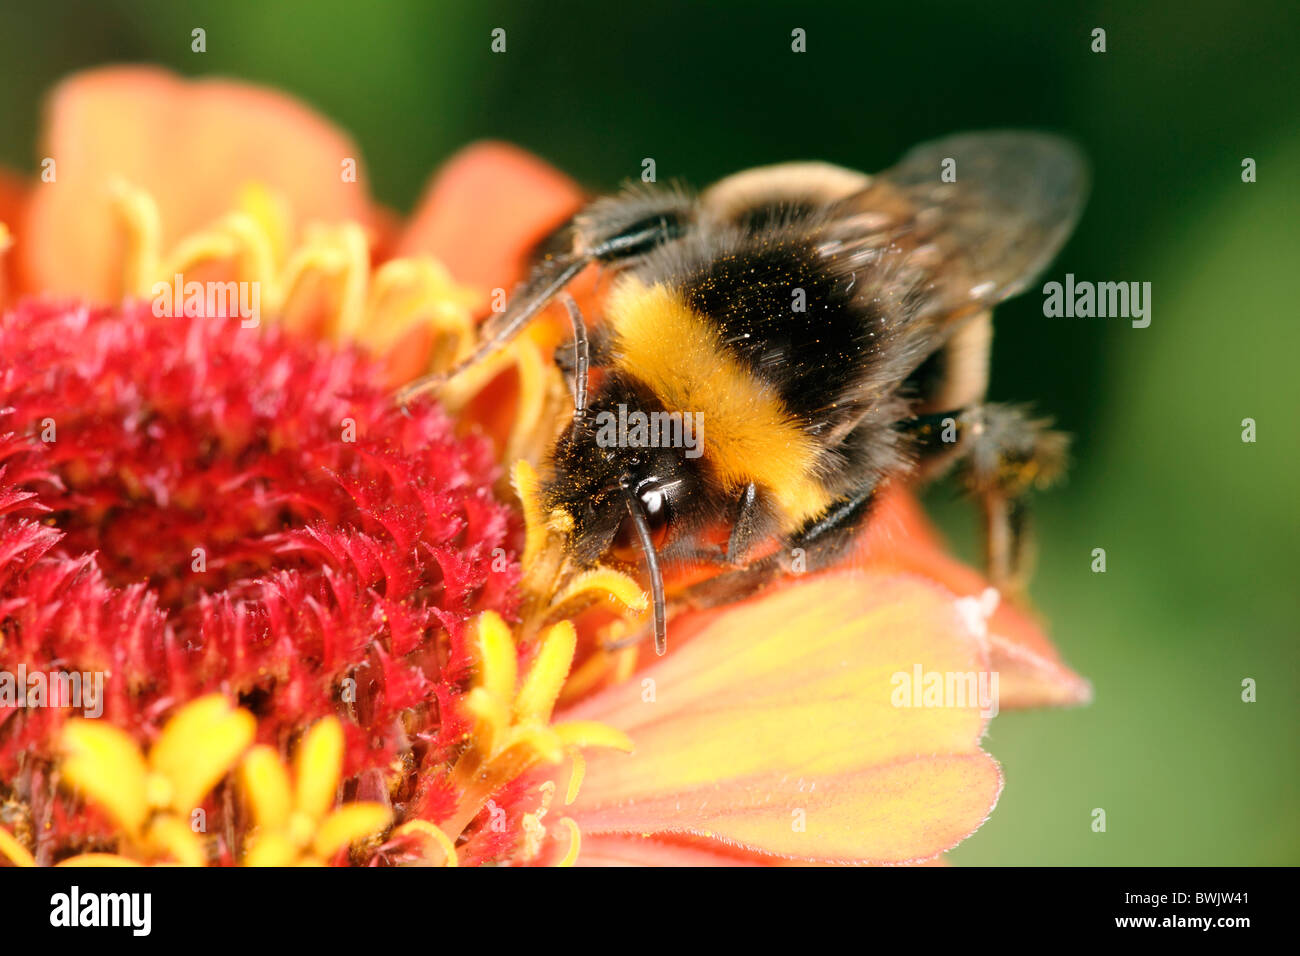 animal animals bee bees biology botany bumble-bee bumblebee Close-up detail exterior fauna flora flower Stock Photo